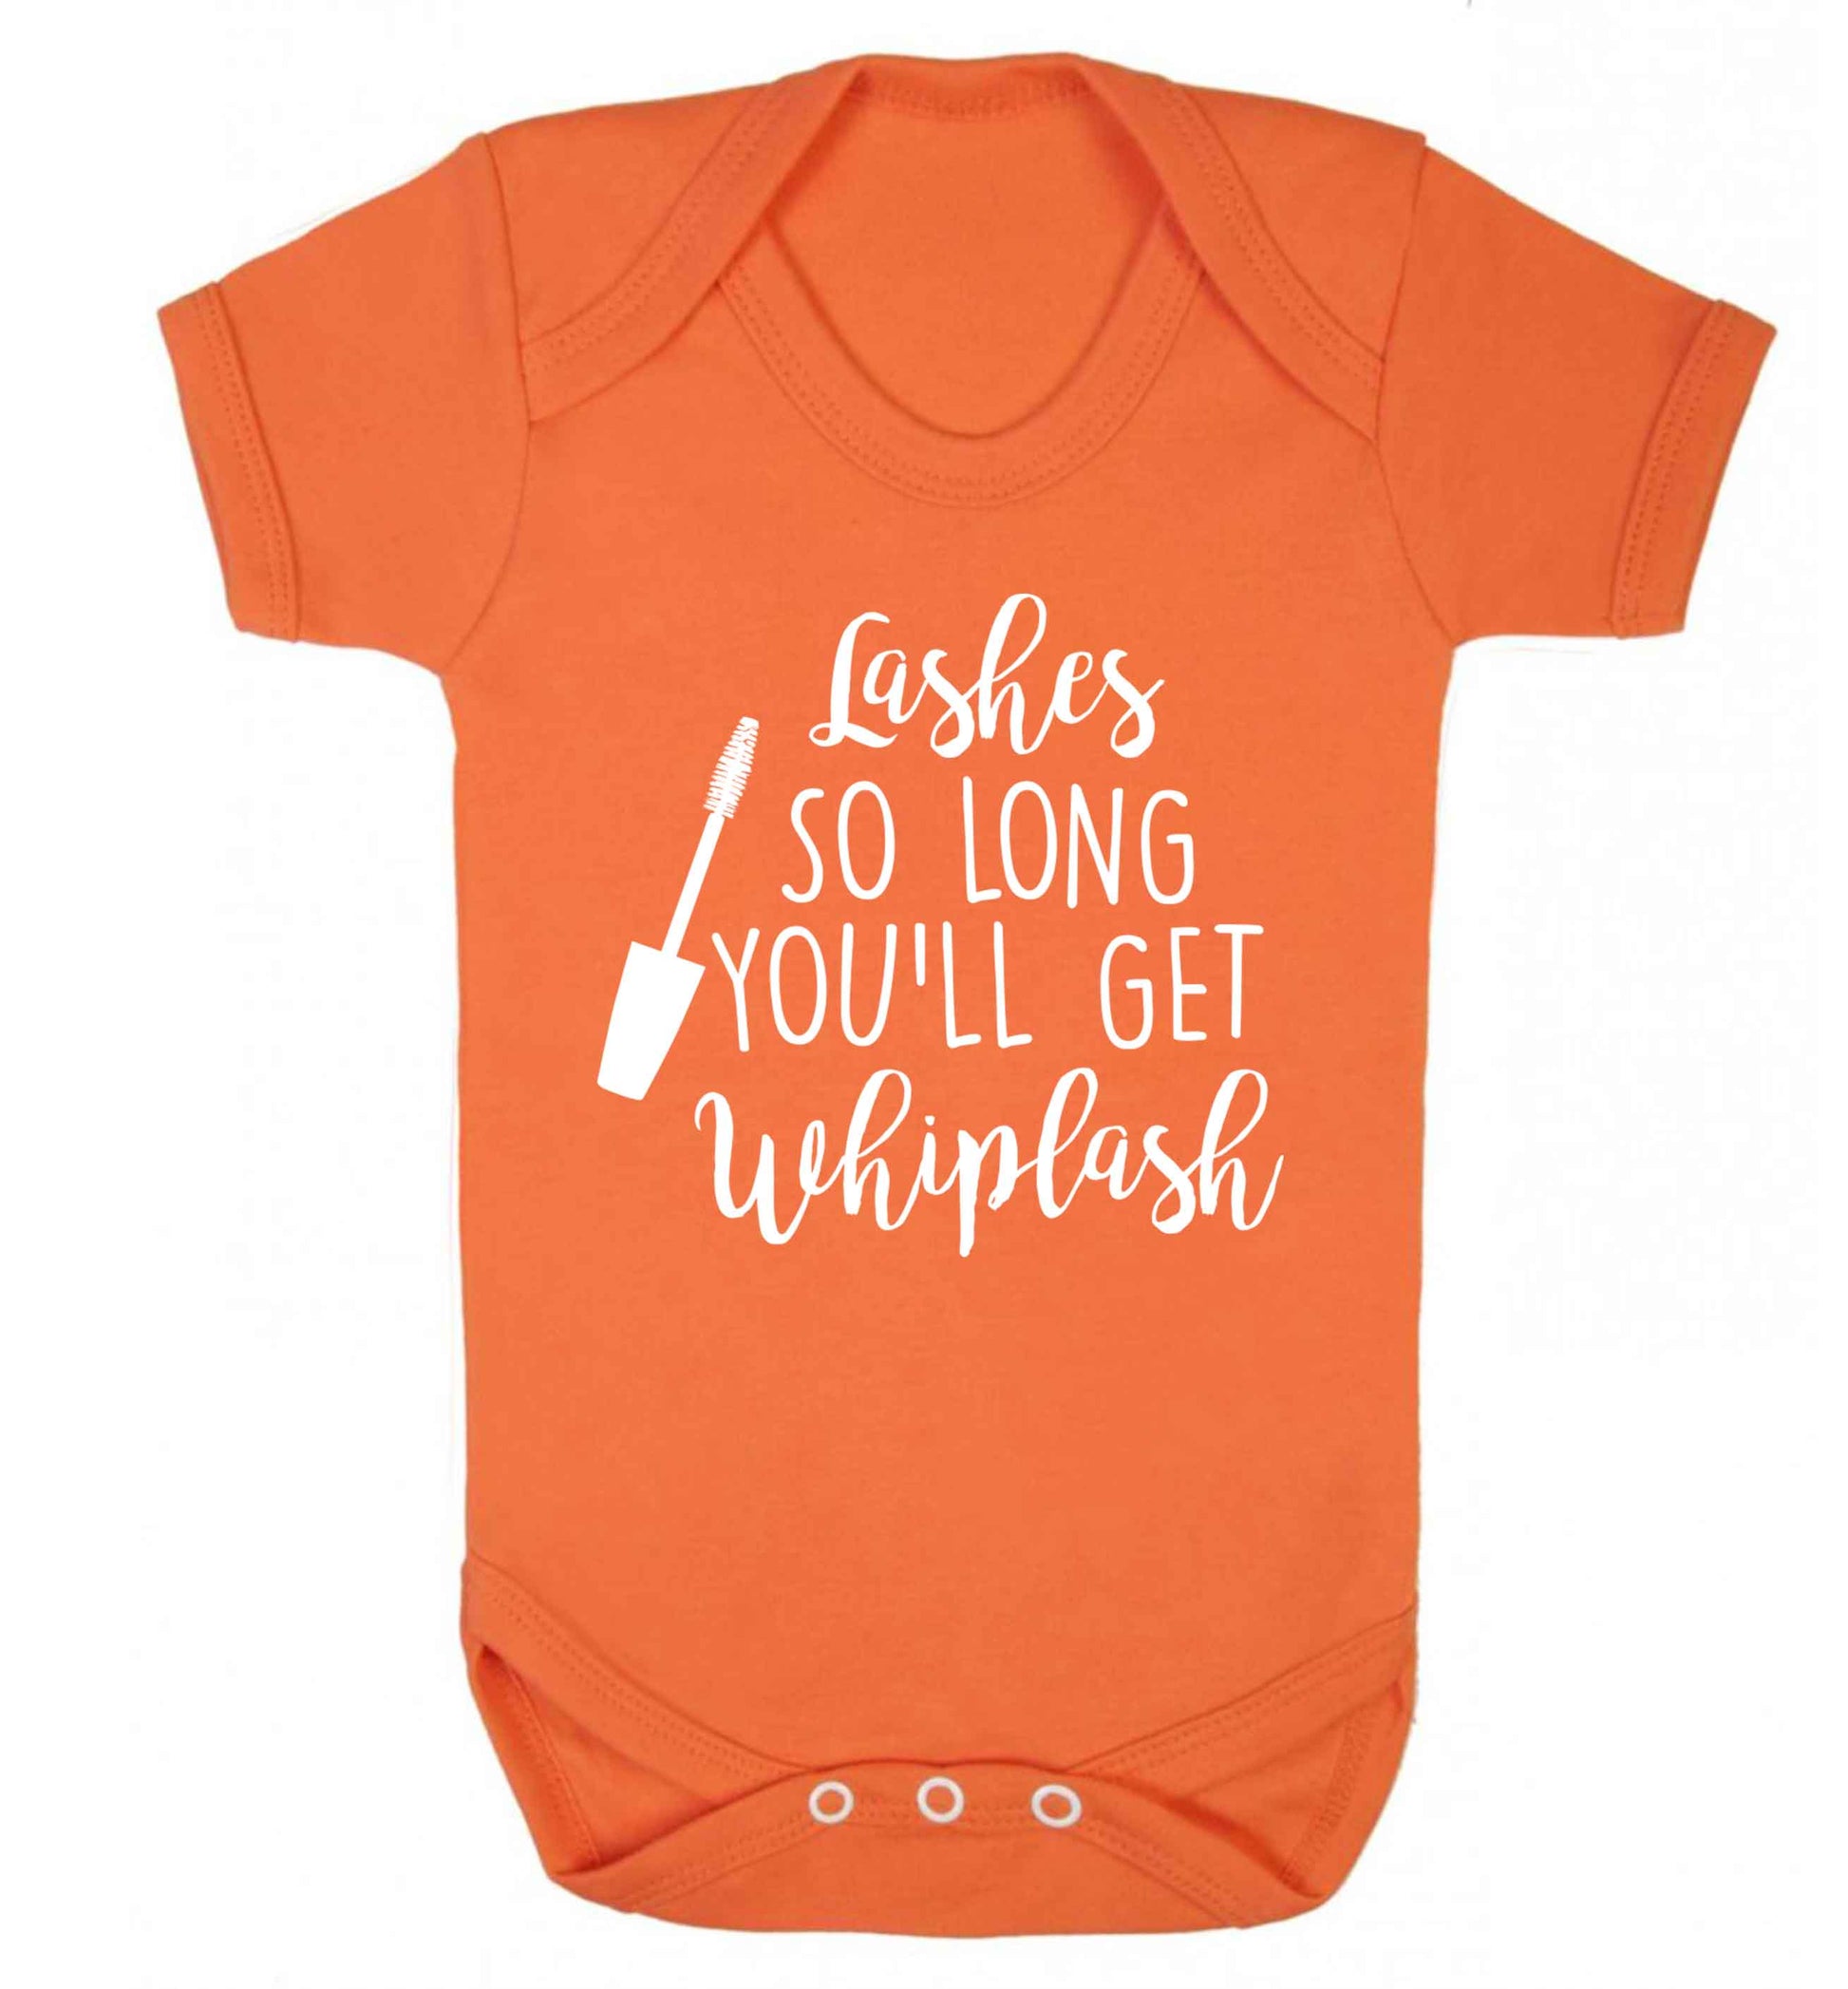 Lashes so long you'll get whiplash Baby Vest orange 18-24 months